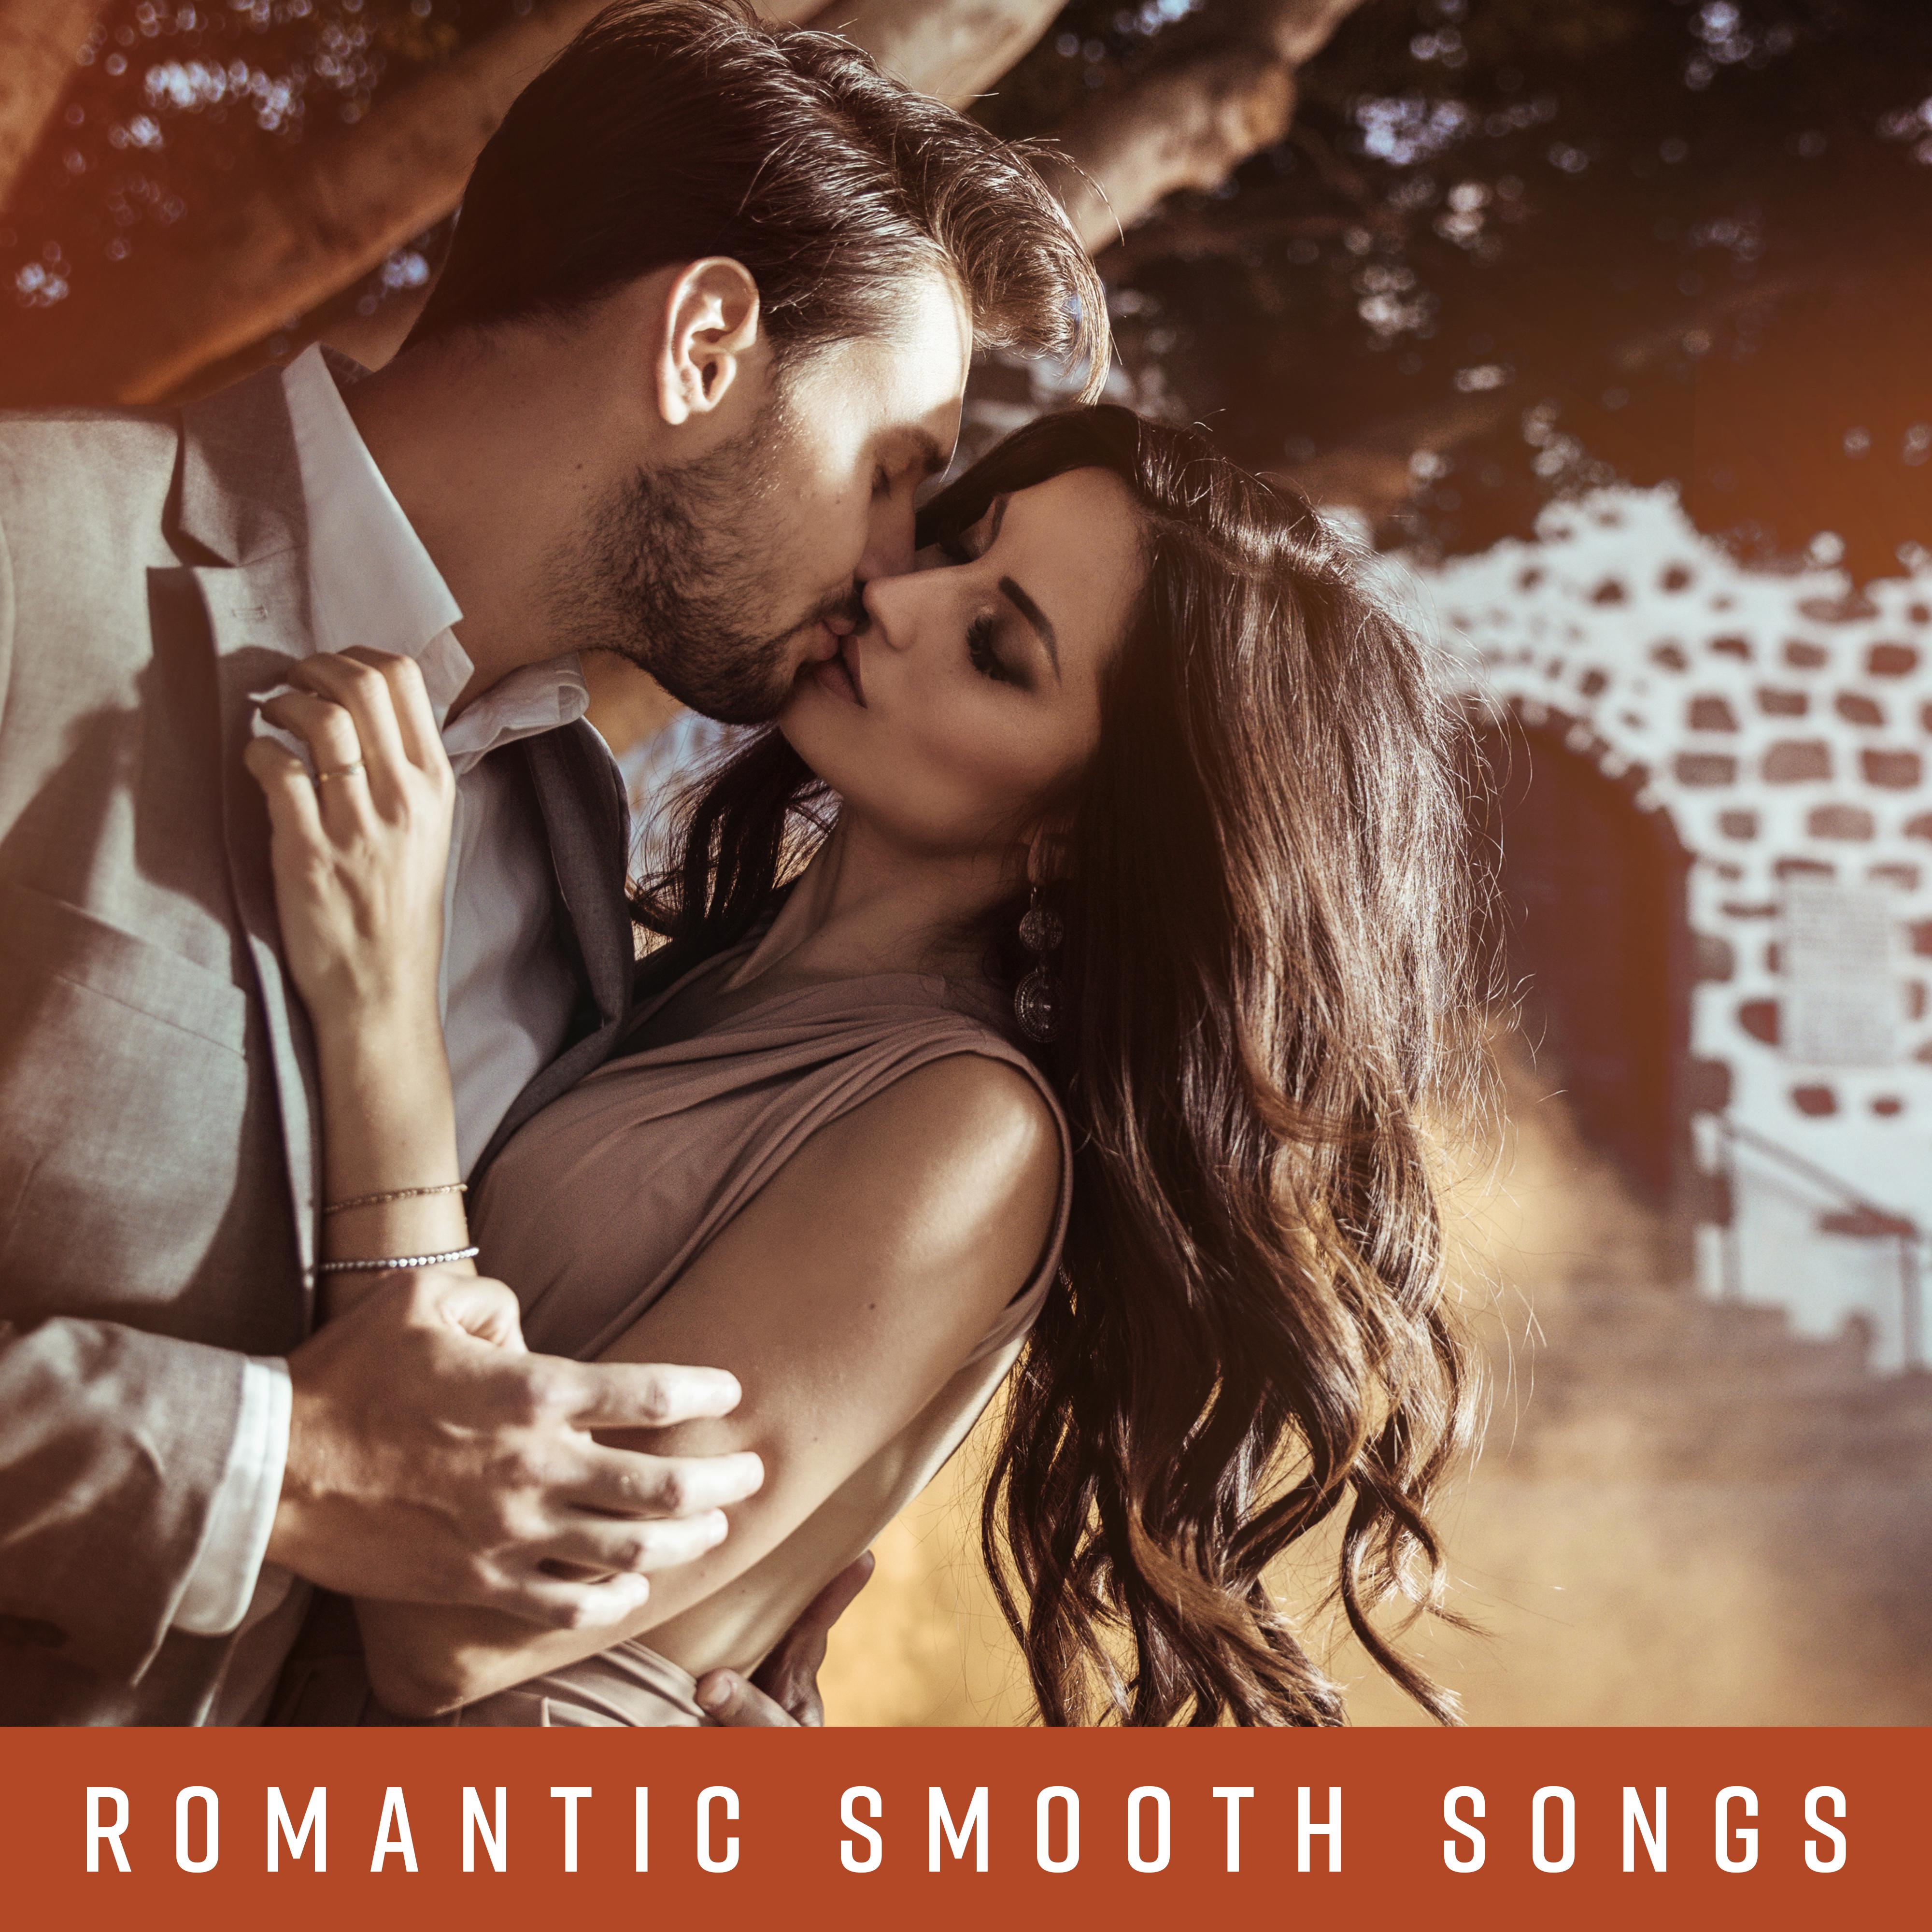 Romantic Smooth Songs  Sensual Jazz Music, Instrumental Jazz Music Ambient, Sweet Romantic Melodies, Peaceful Jazz Tunes